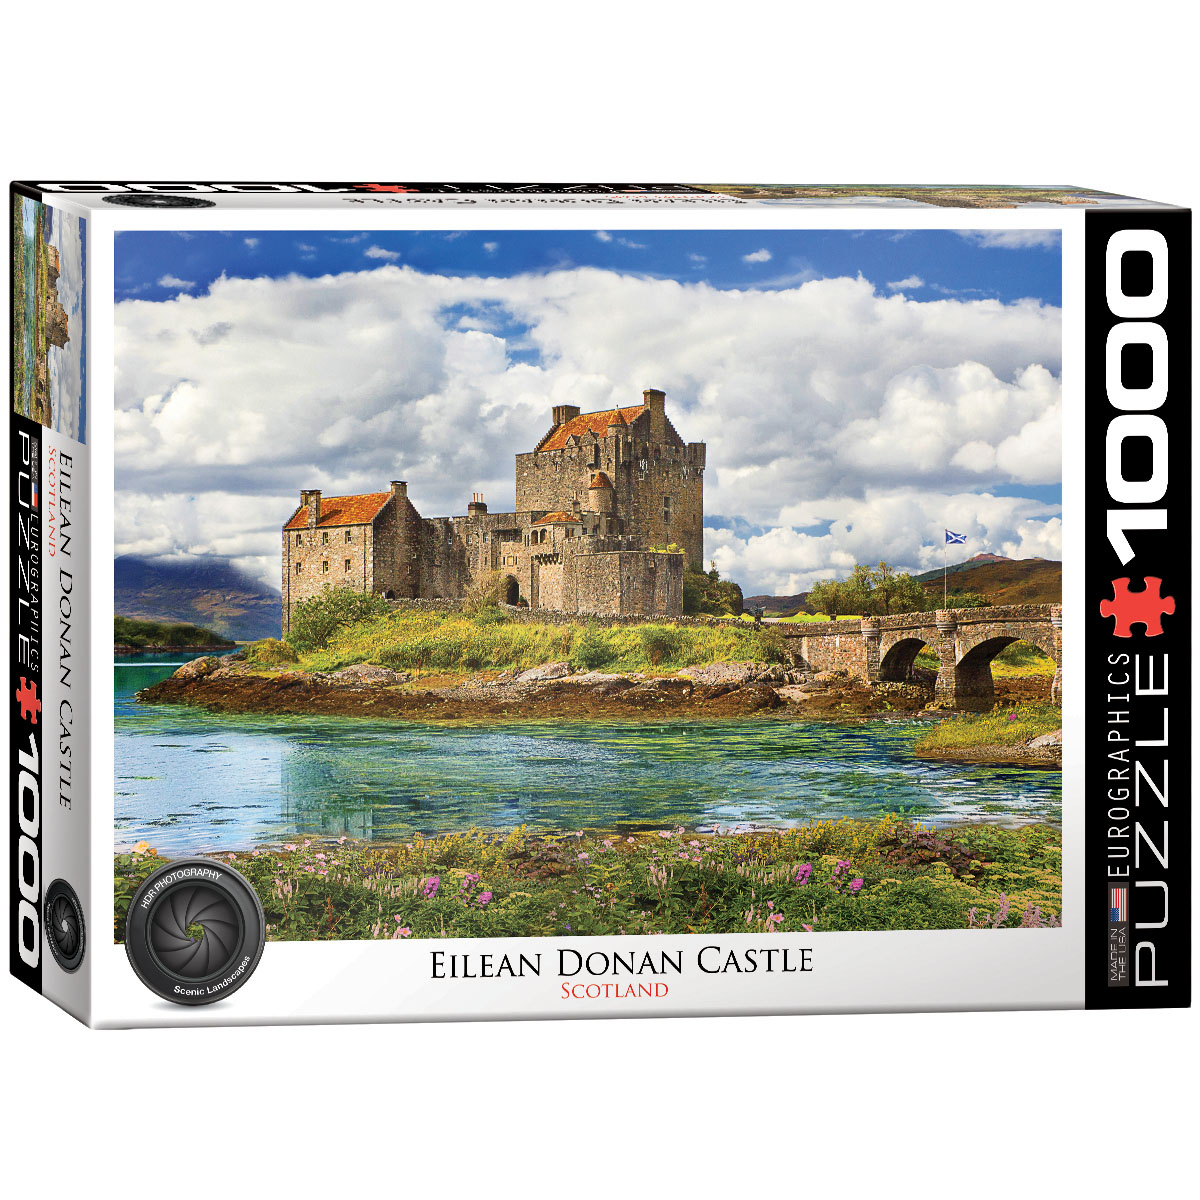 Eilean Donan Castle - Scotland - Scratch and Dent